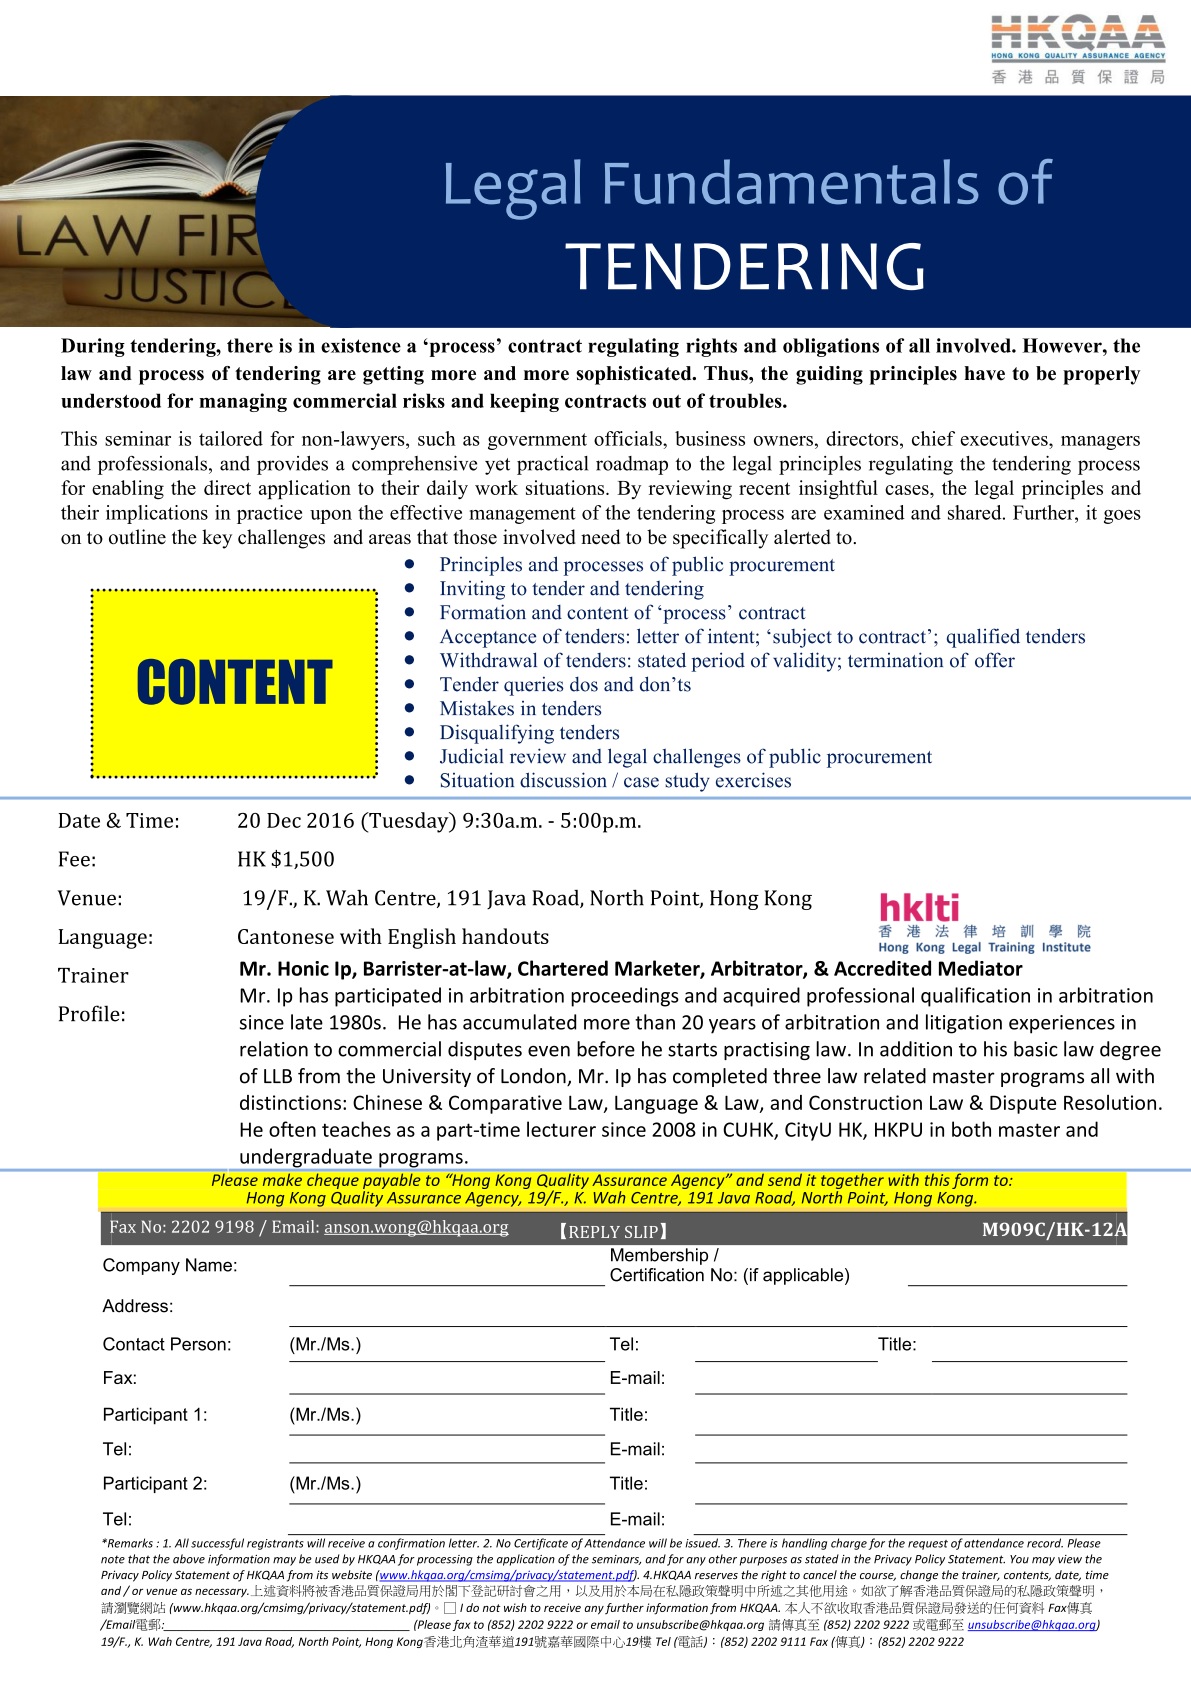 hklti hkqaa legal fundamentals of tendering 20161220